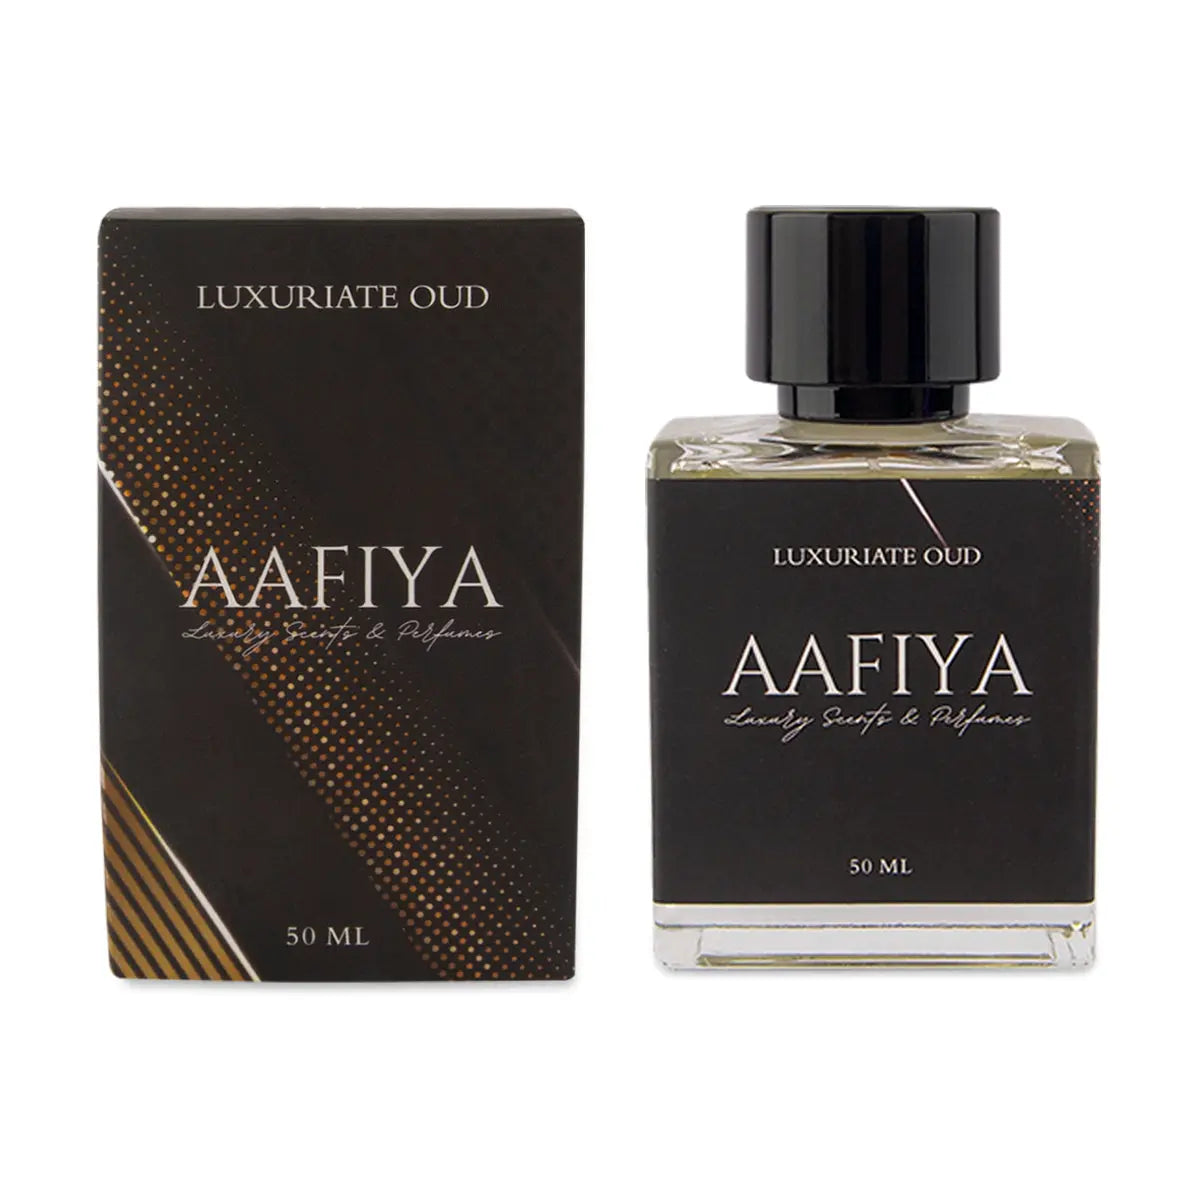 Luxuriate Oud Aafiya Luxury Scents & Perfumes